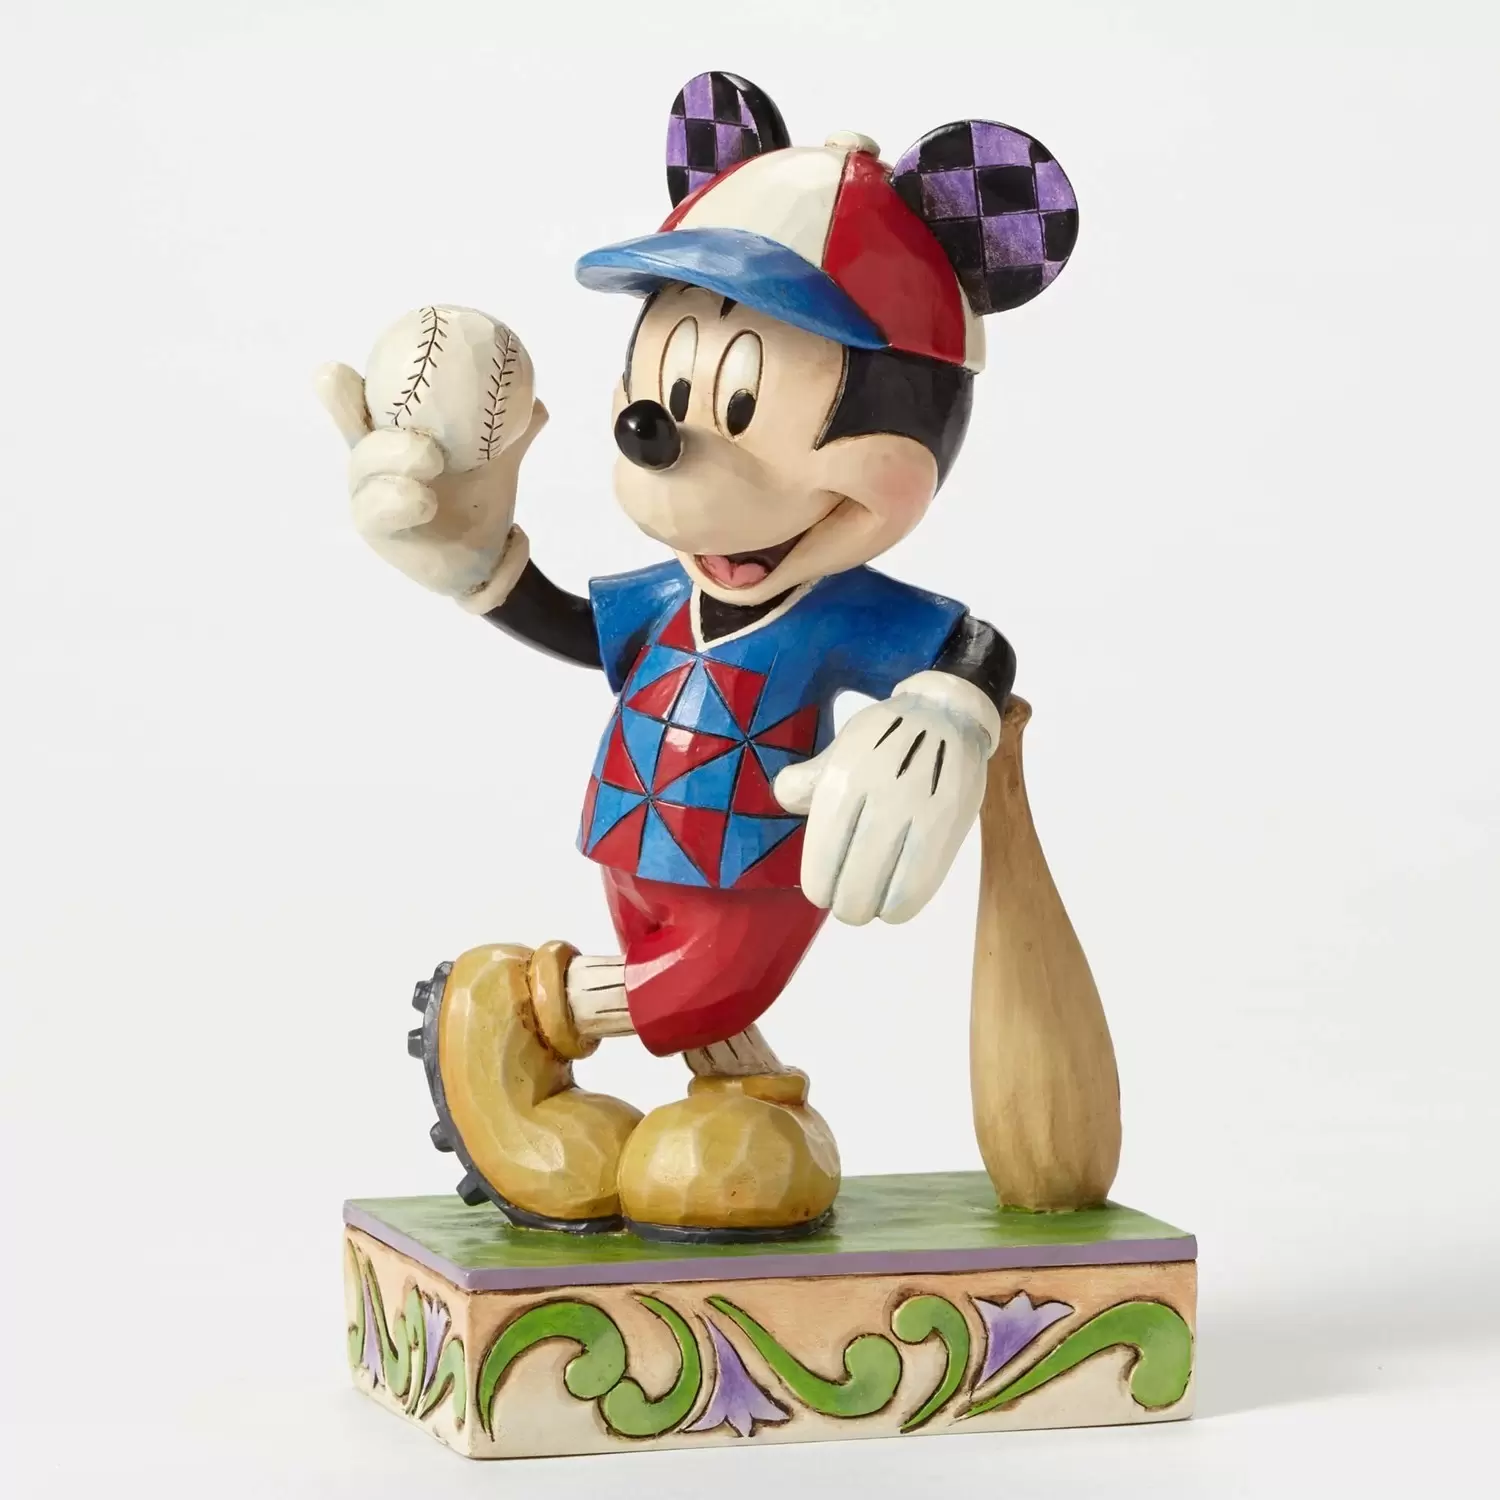 Disney Traditions by Jim Shore - Batter Up - Baseball Mickey